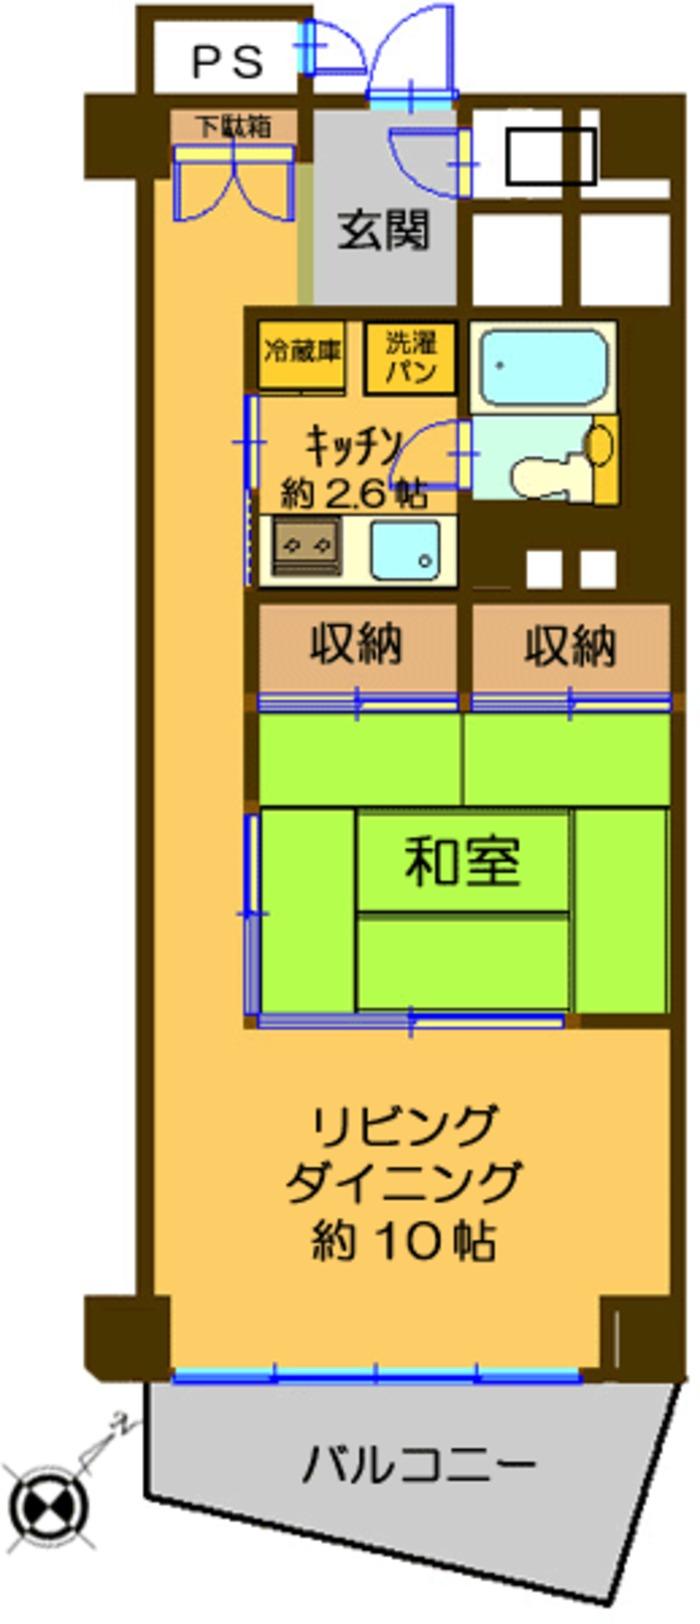 Floor plan. 1LDK, Price 5.5 million yen, Occupied area 44.03 sq m , Balcony area 7.6 sq m